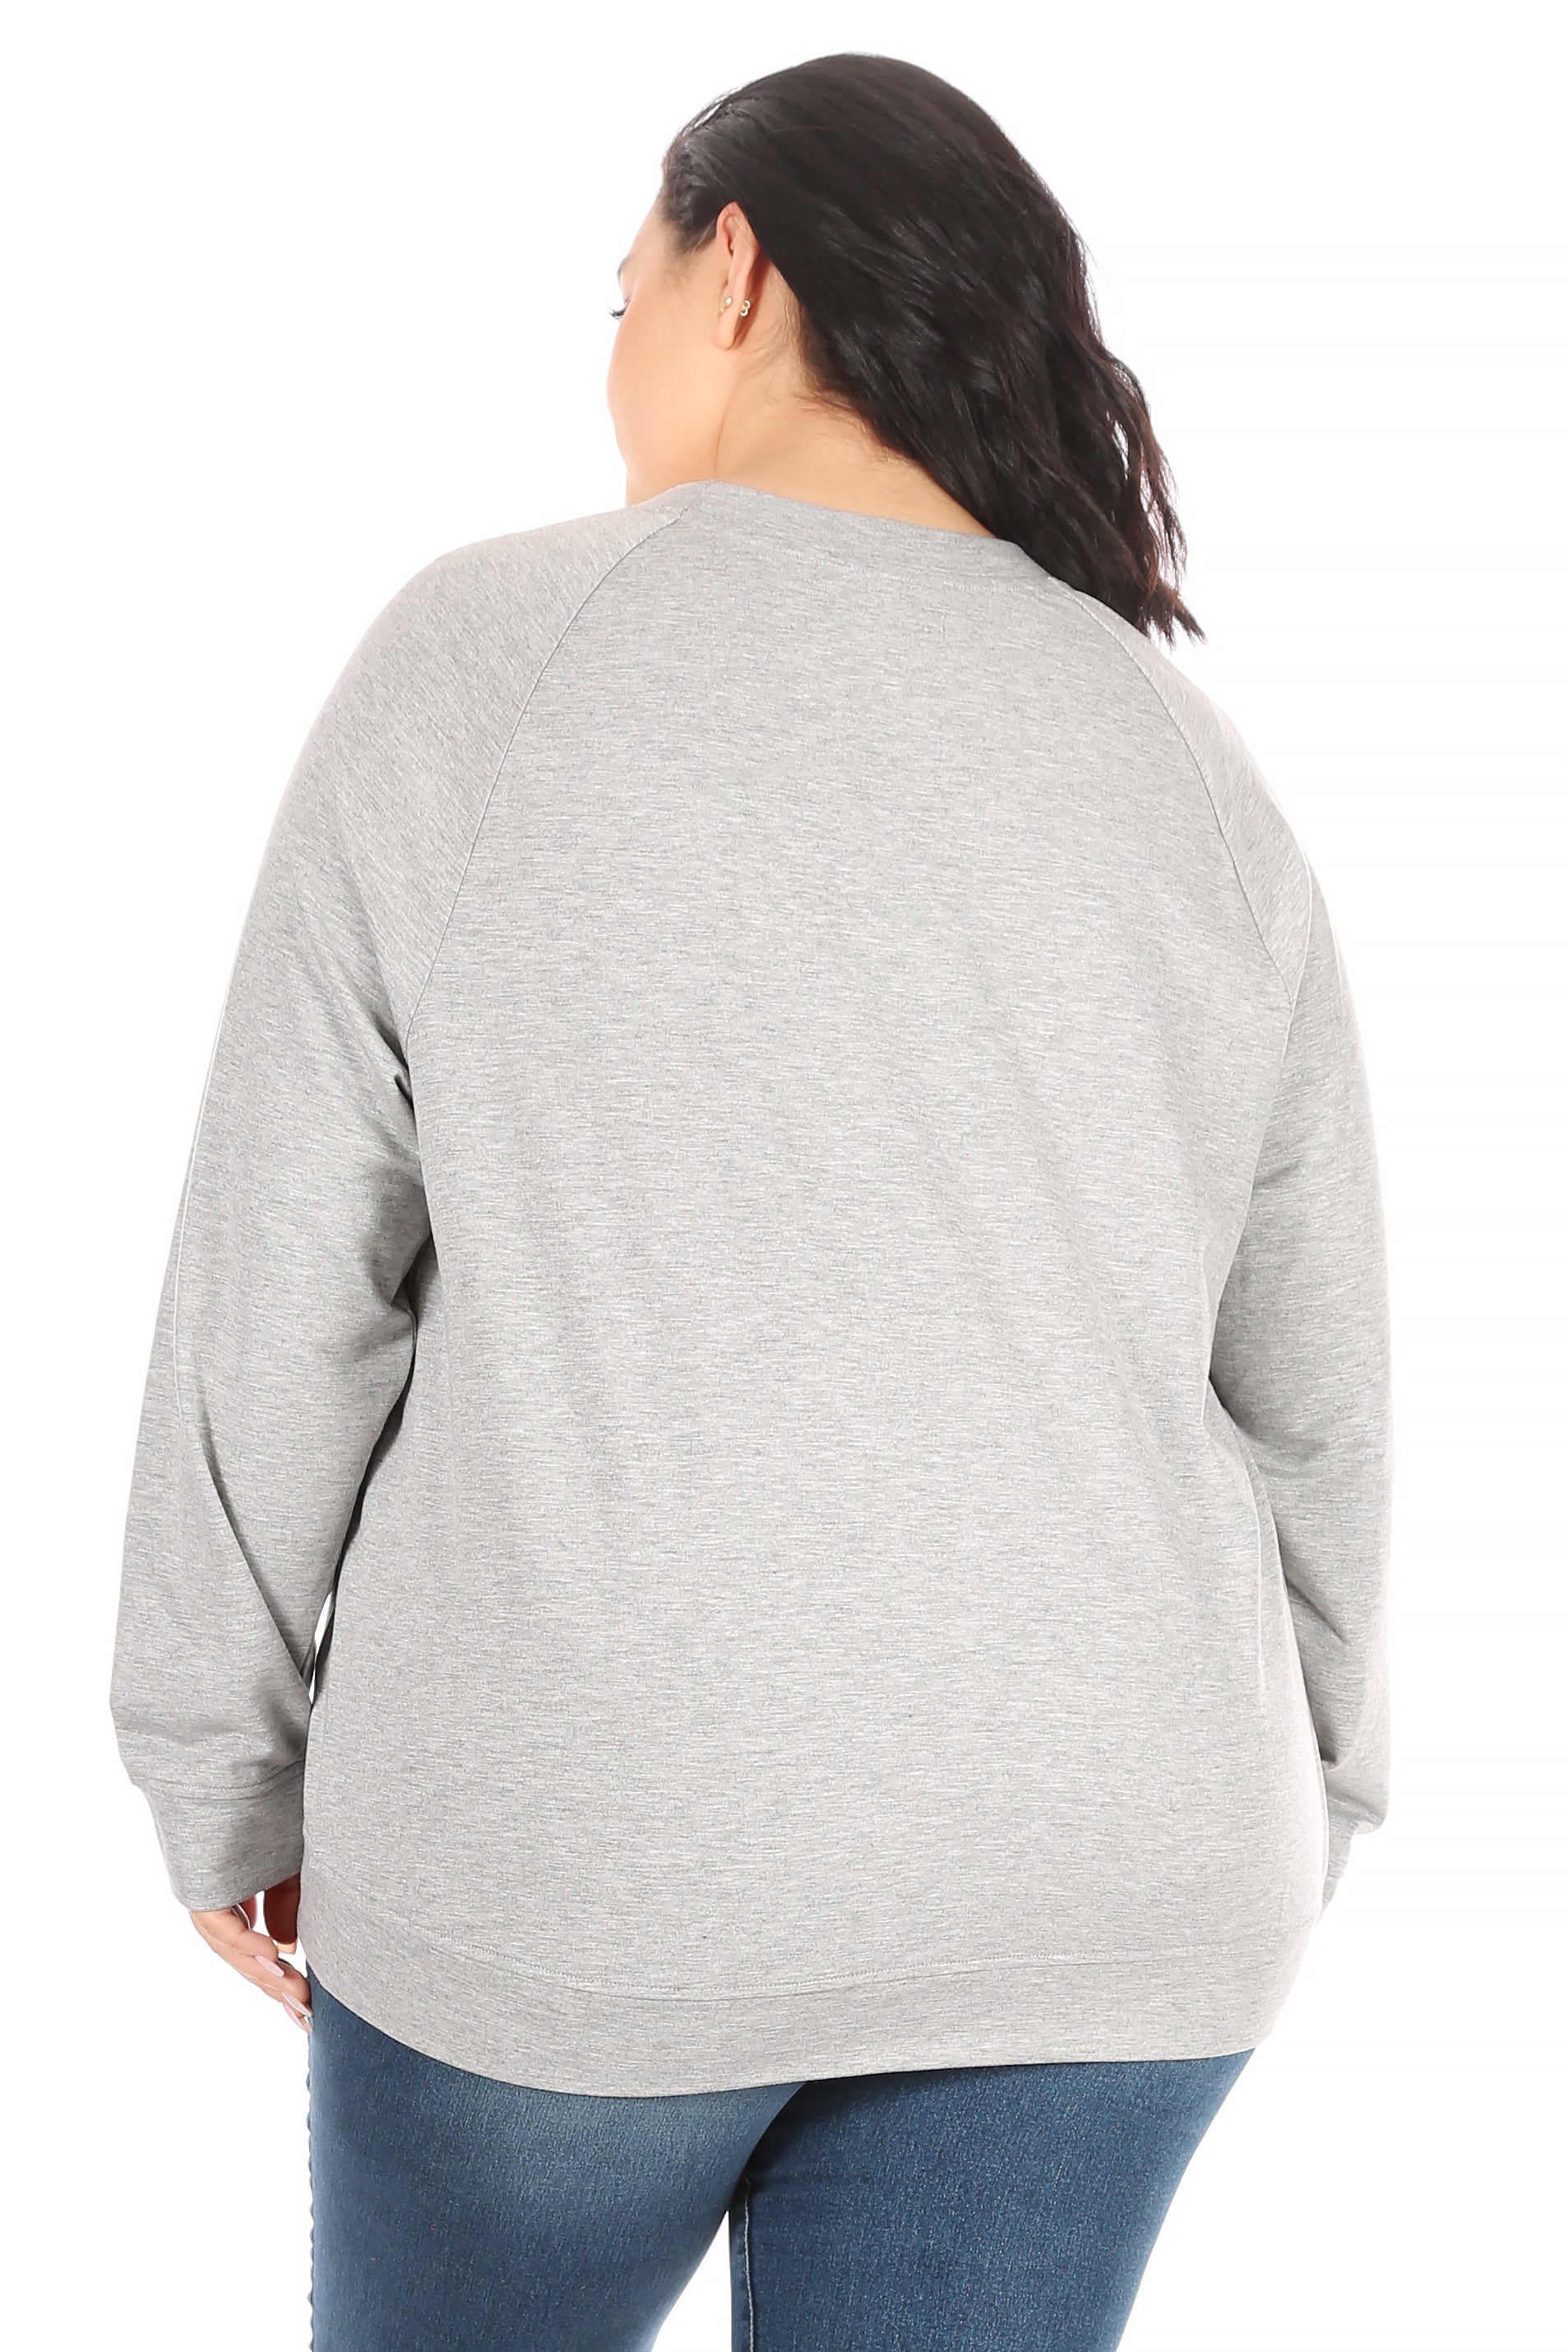 Women's "DOG MOM" Plus Size Studio Raglan Pullover Sweatshirt - Rae Dunn Wear